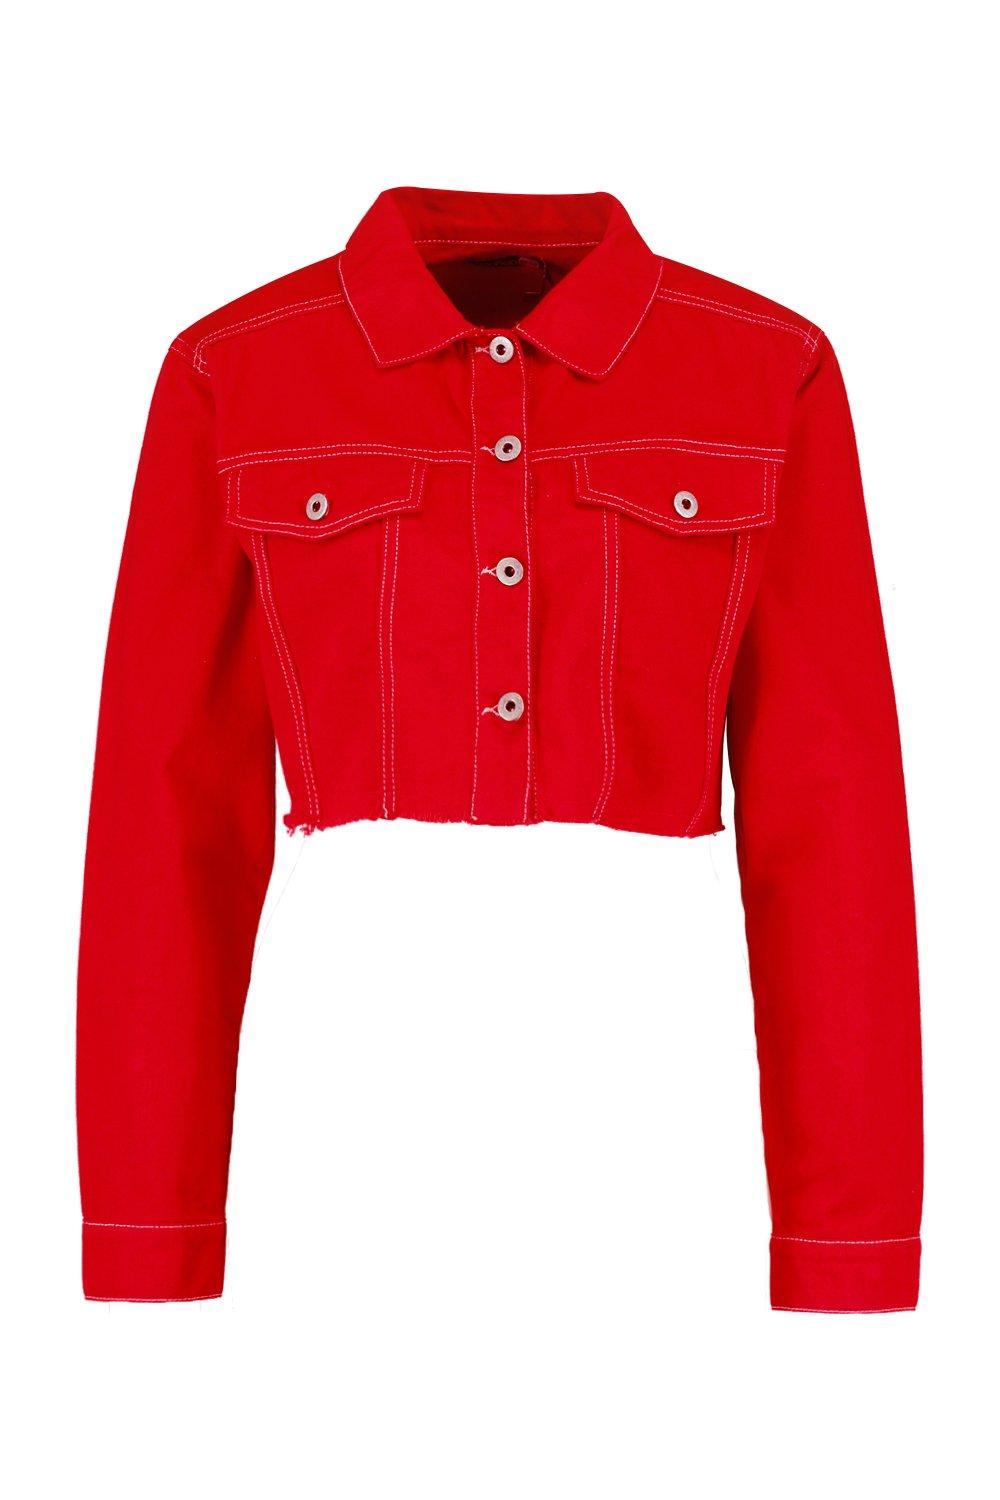 red distressed jean jacket